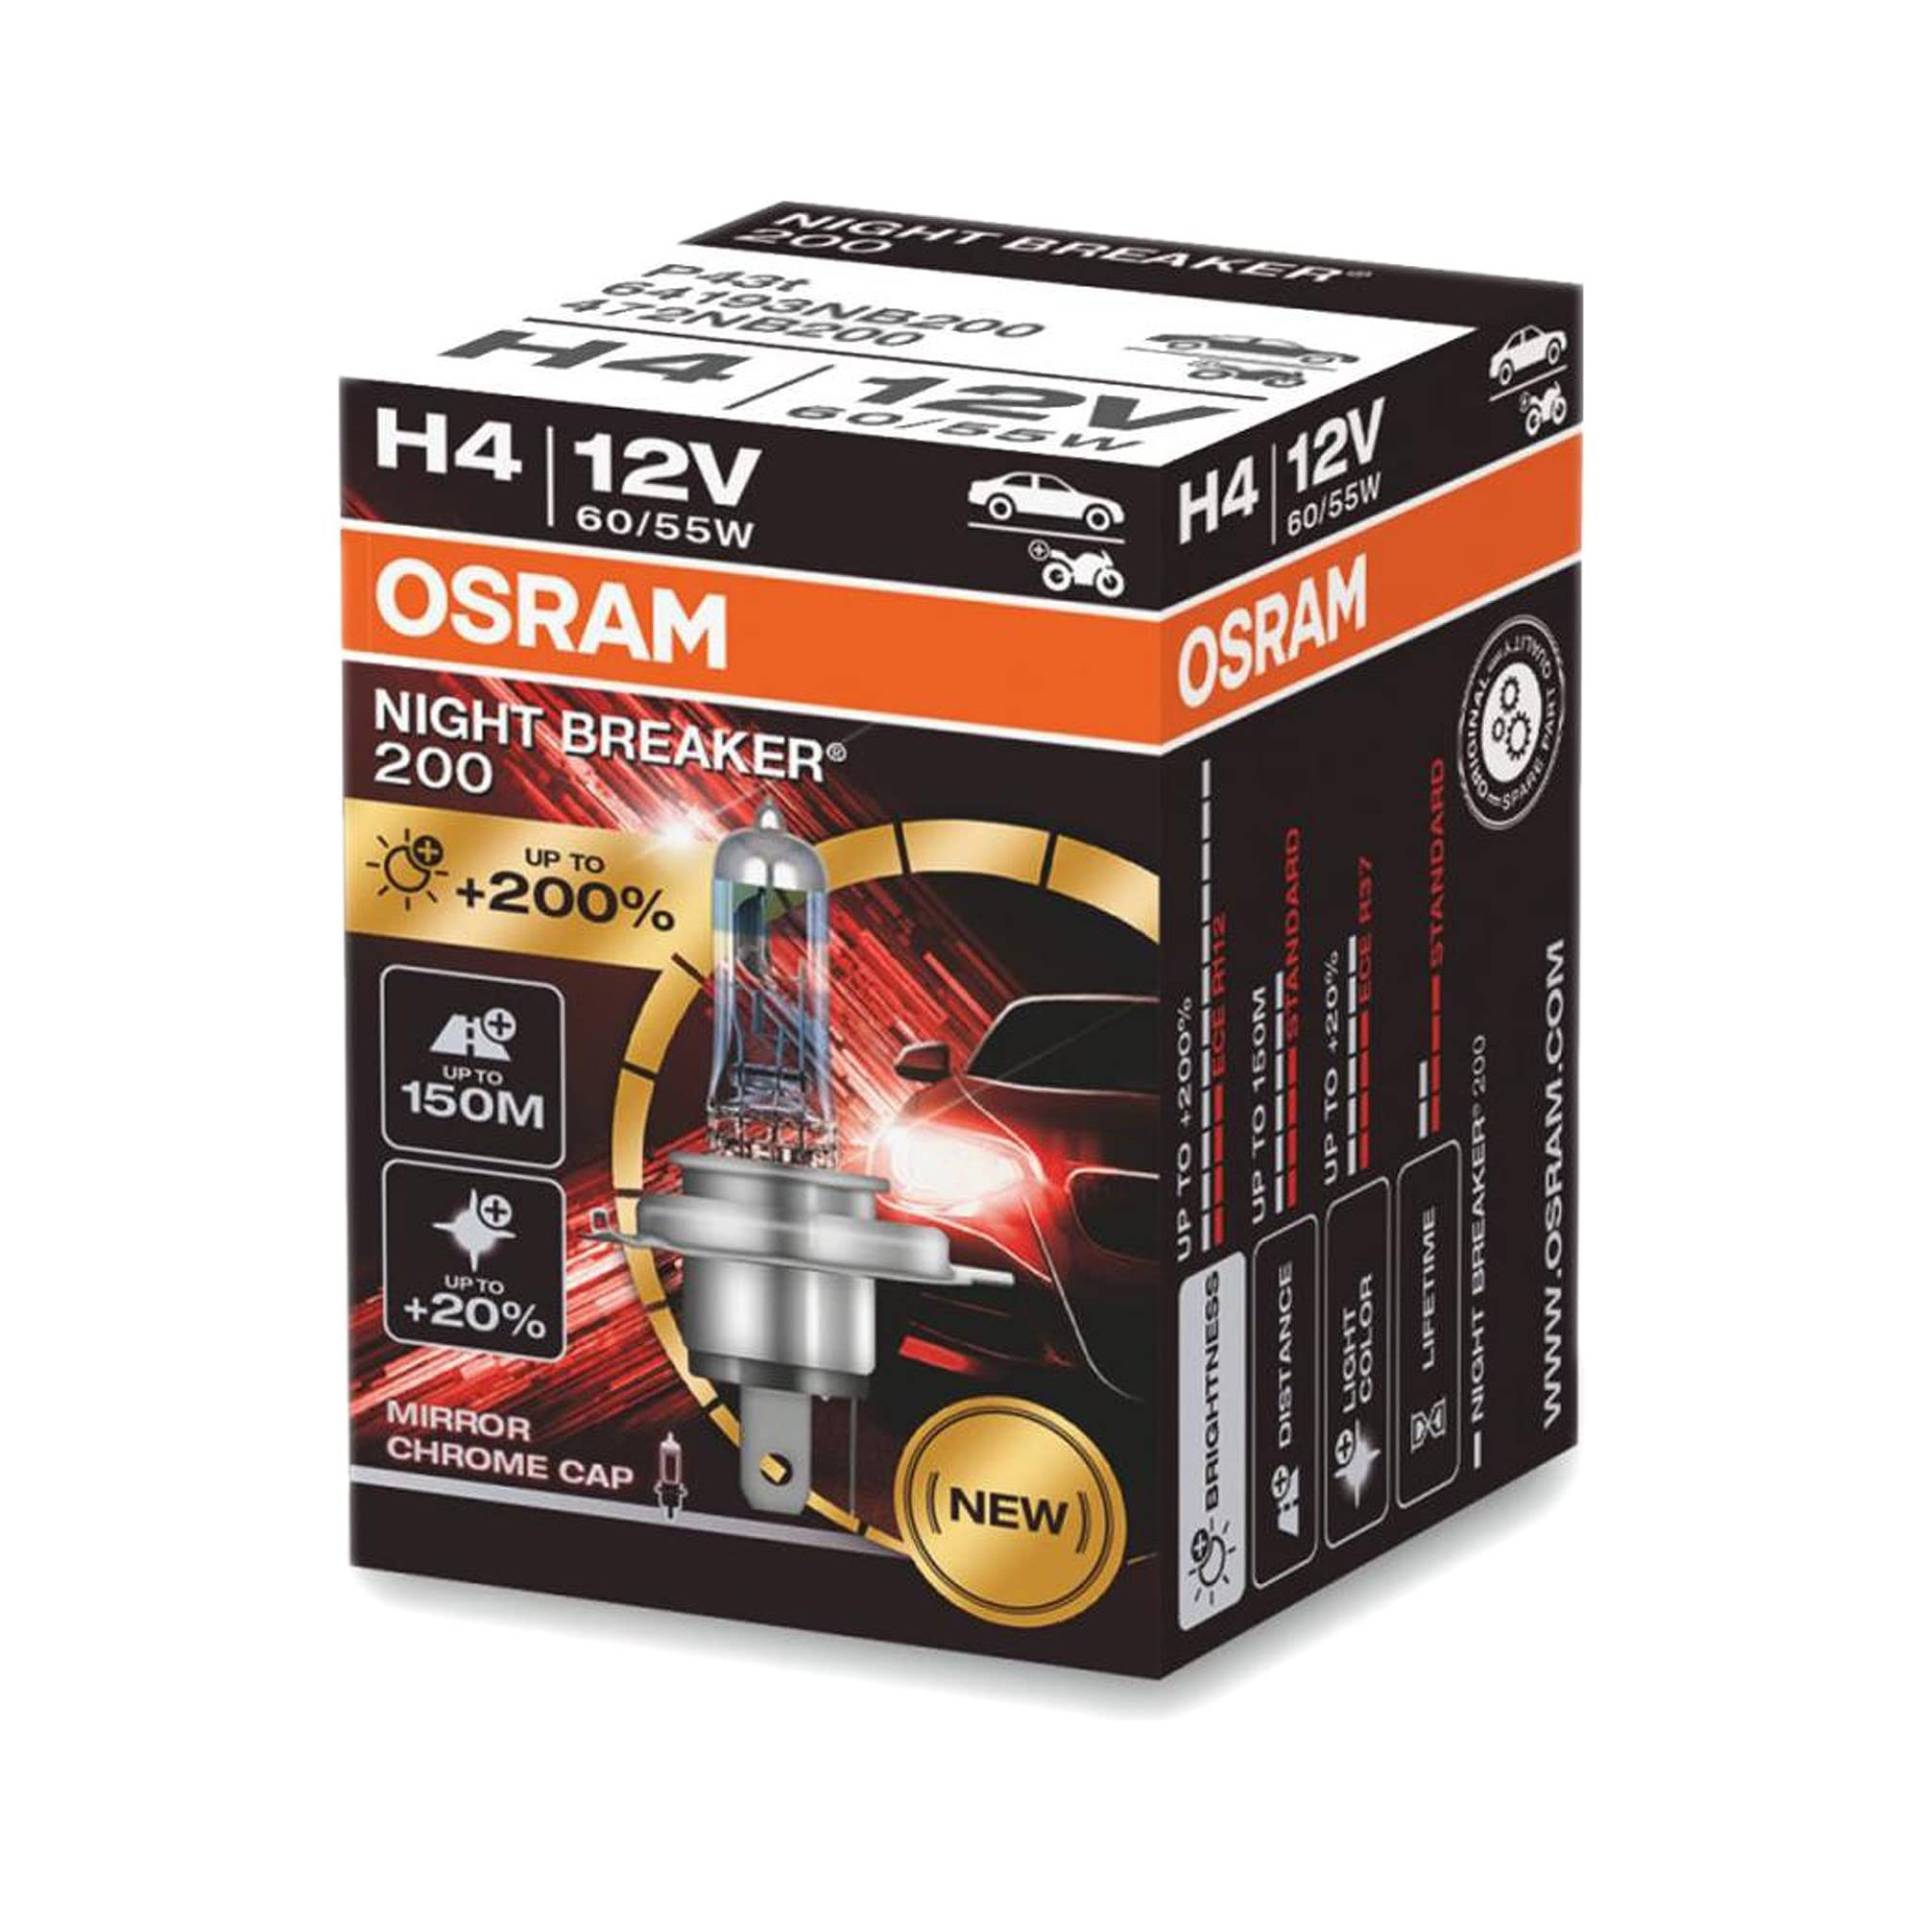 Osram Night Breaker 200 Halogen Birne - H4 - 12V/60-55W - pro Stück von Osram